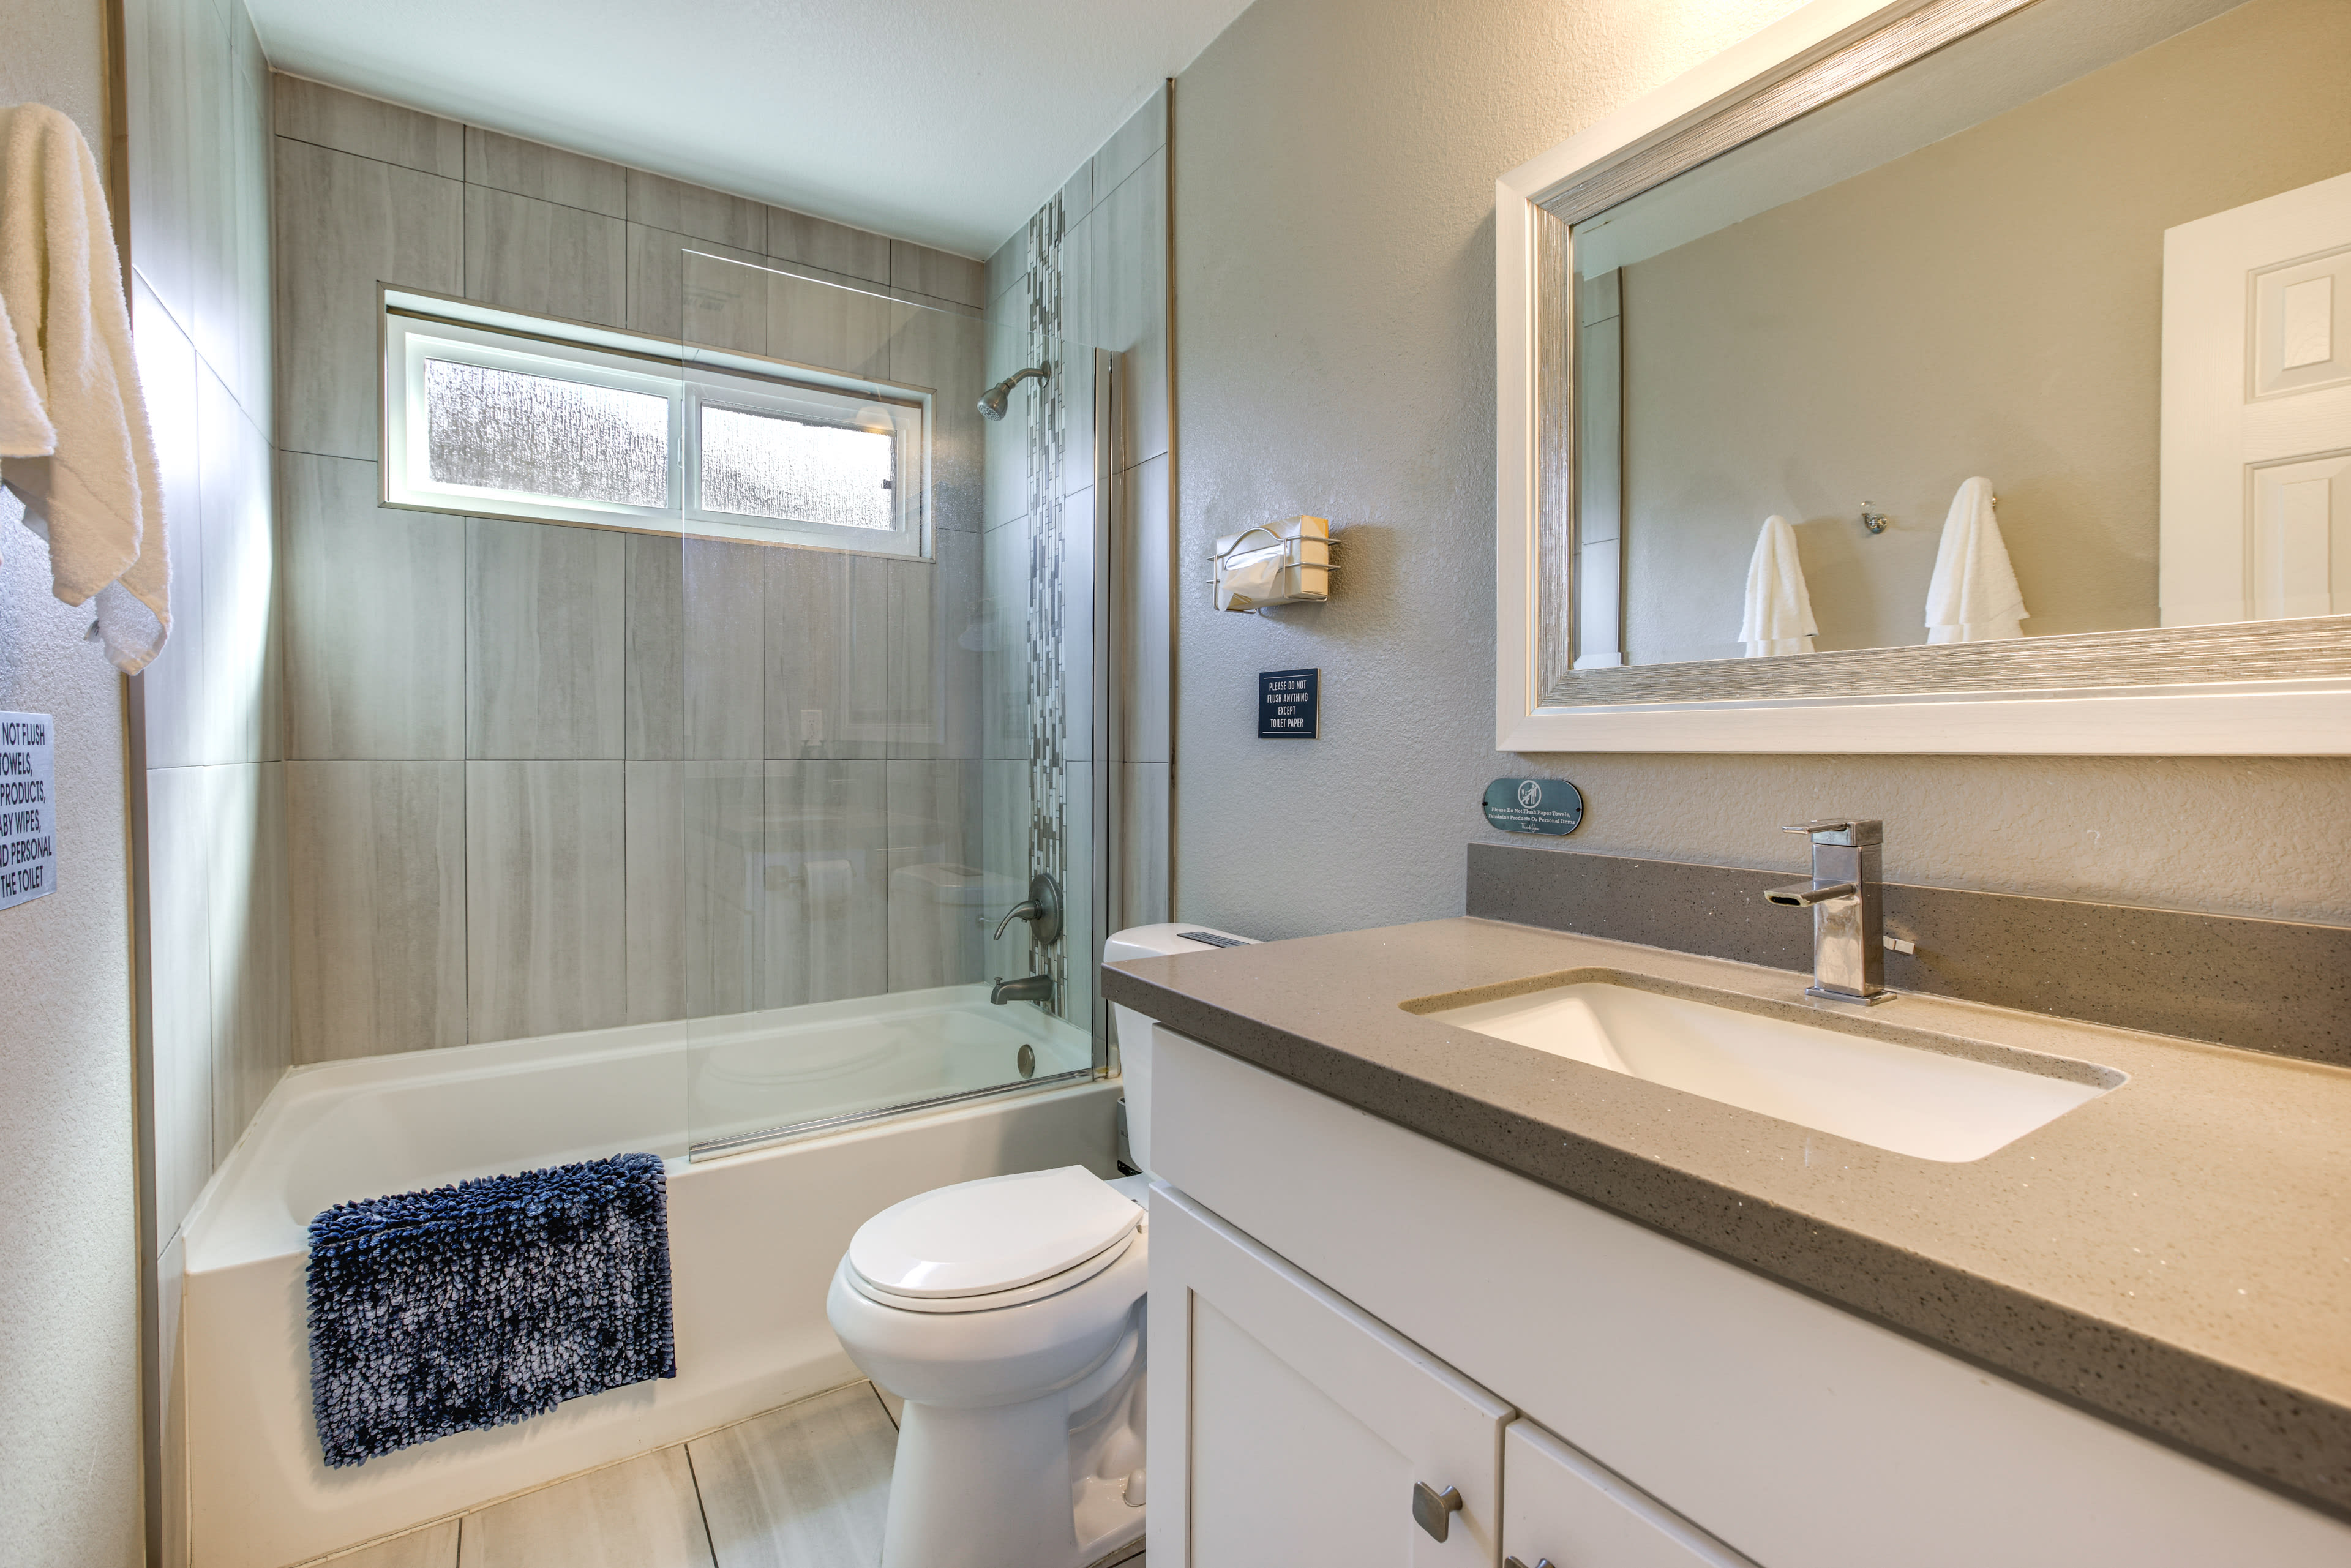 Full Bathroom | Shower/Tub Combo | Complimentary Toiletries | Hair Dryer